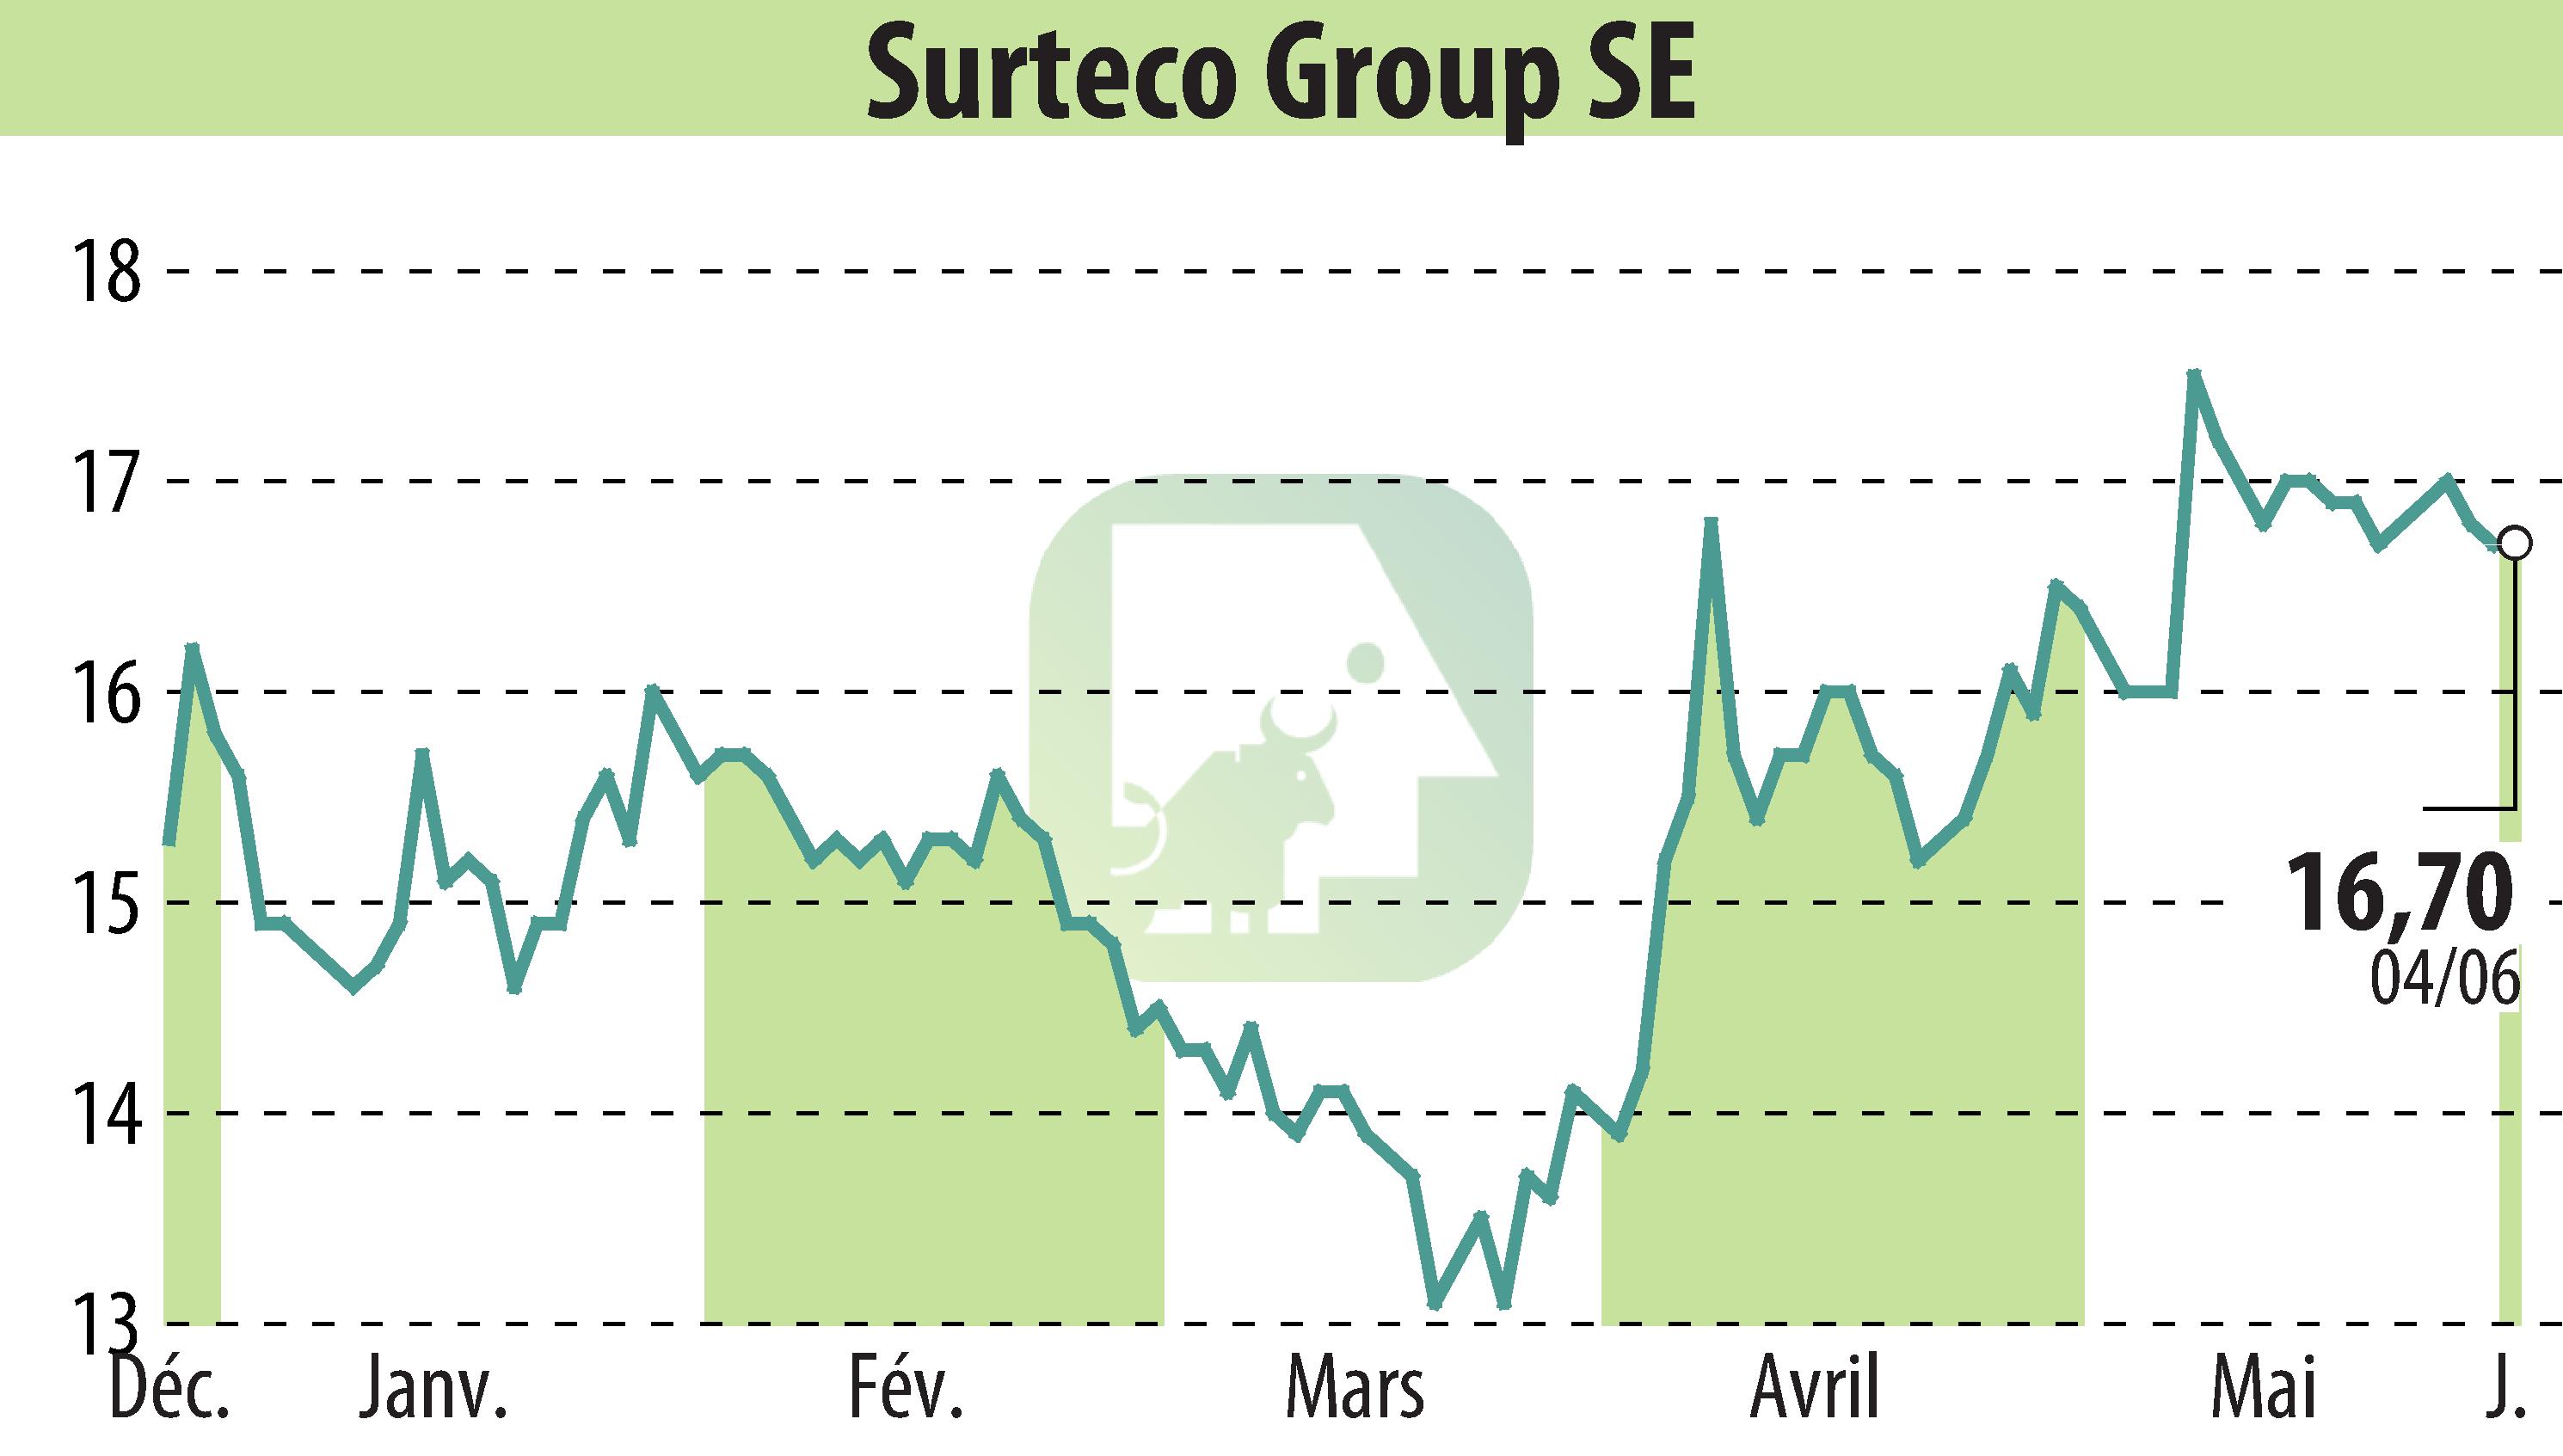 Stock price chart of SURTECO SE (EBR:SUR) showing fluctuations.